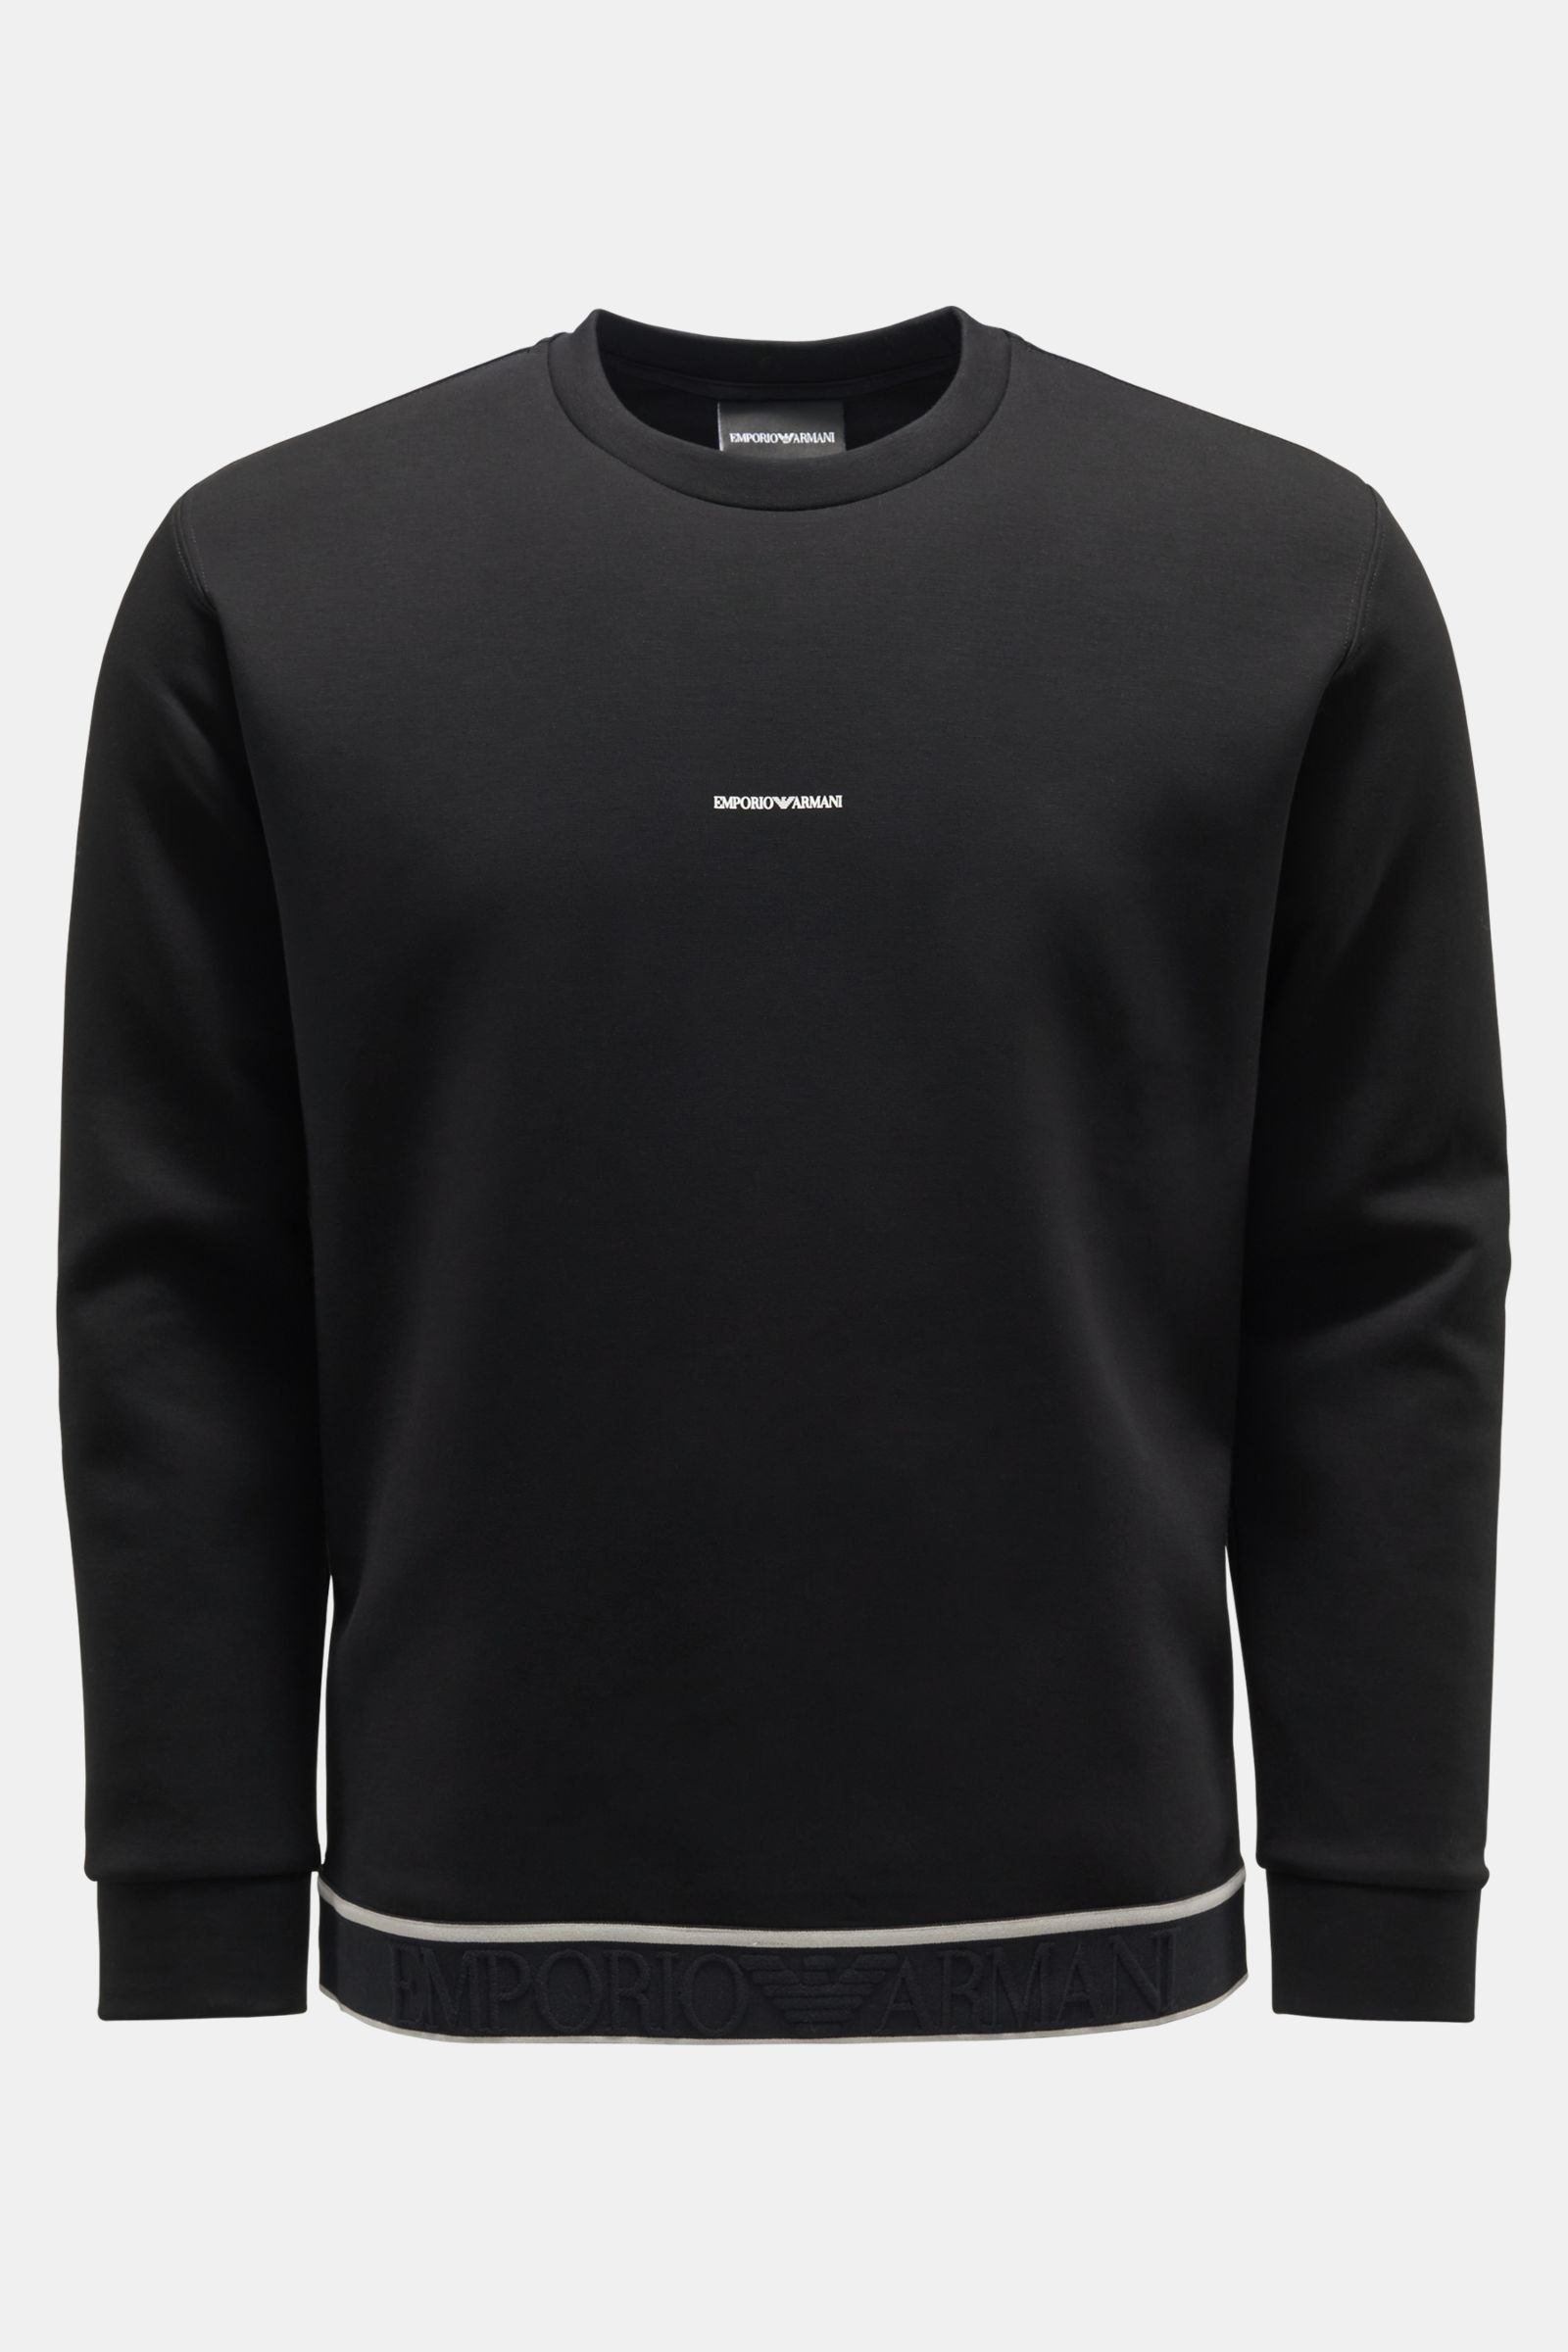 EMPORIO ARMANI neoprene crew neck sweatshirt black | BRAUN Hamburg